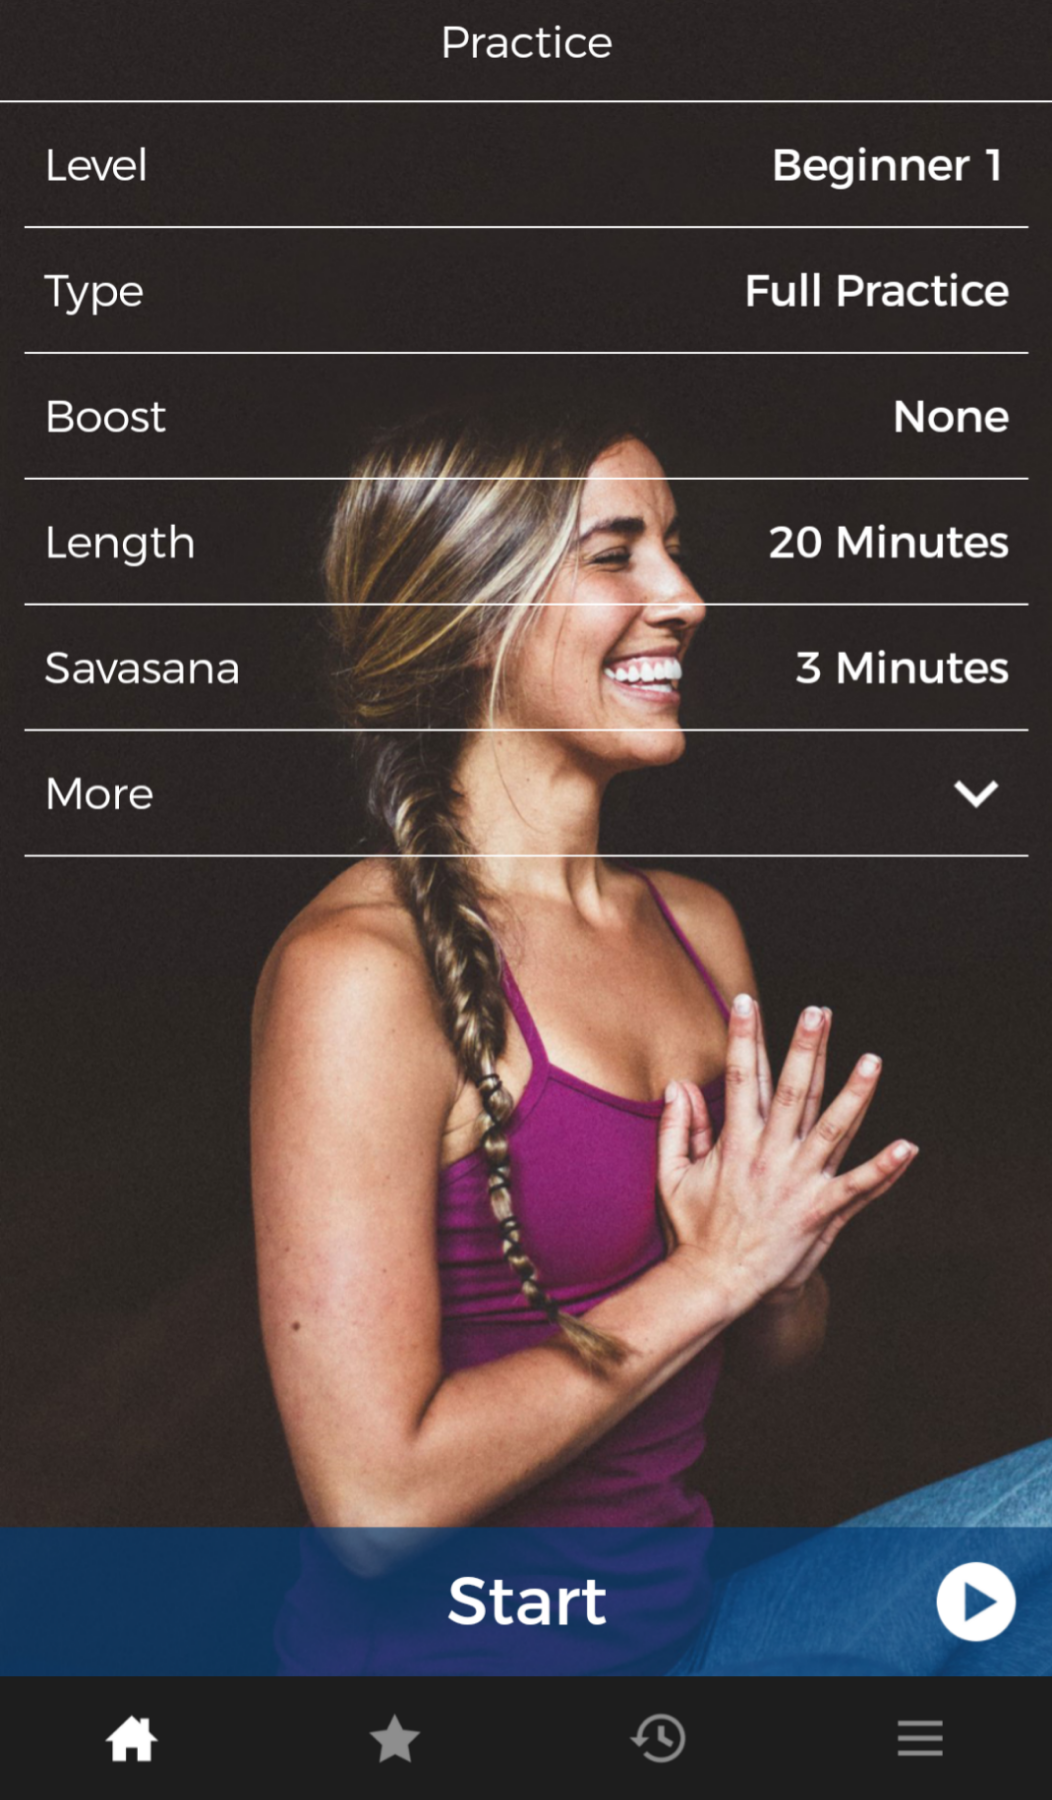 Down Dog yoga app lets you choose yoga practices